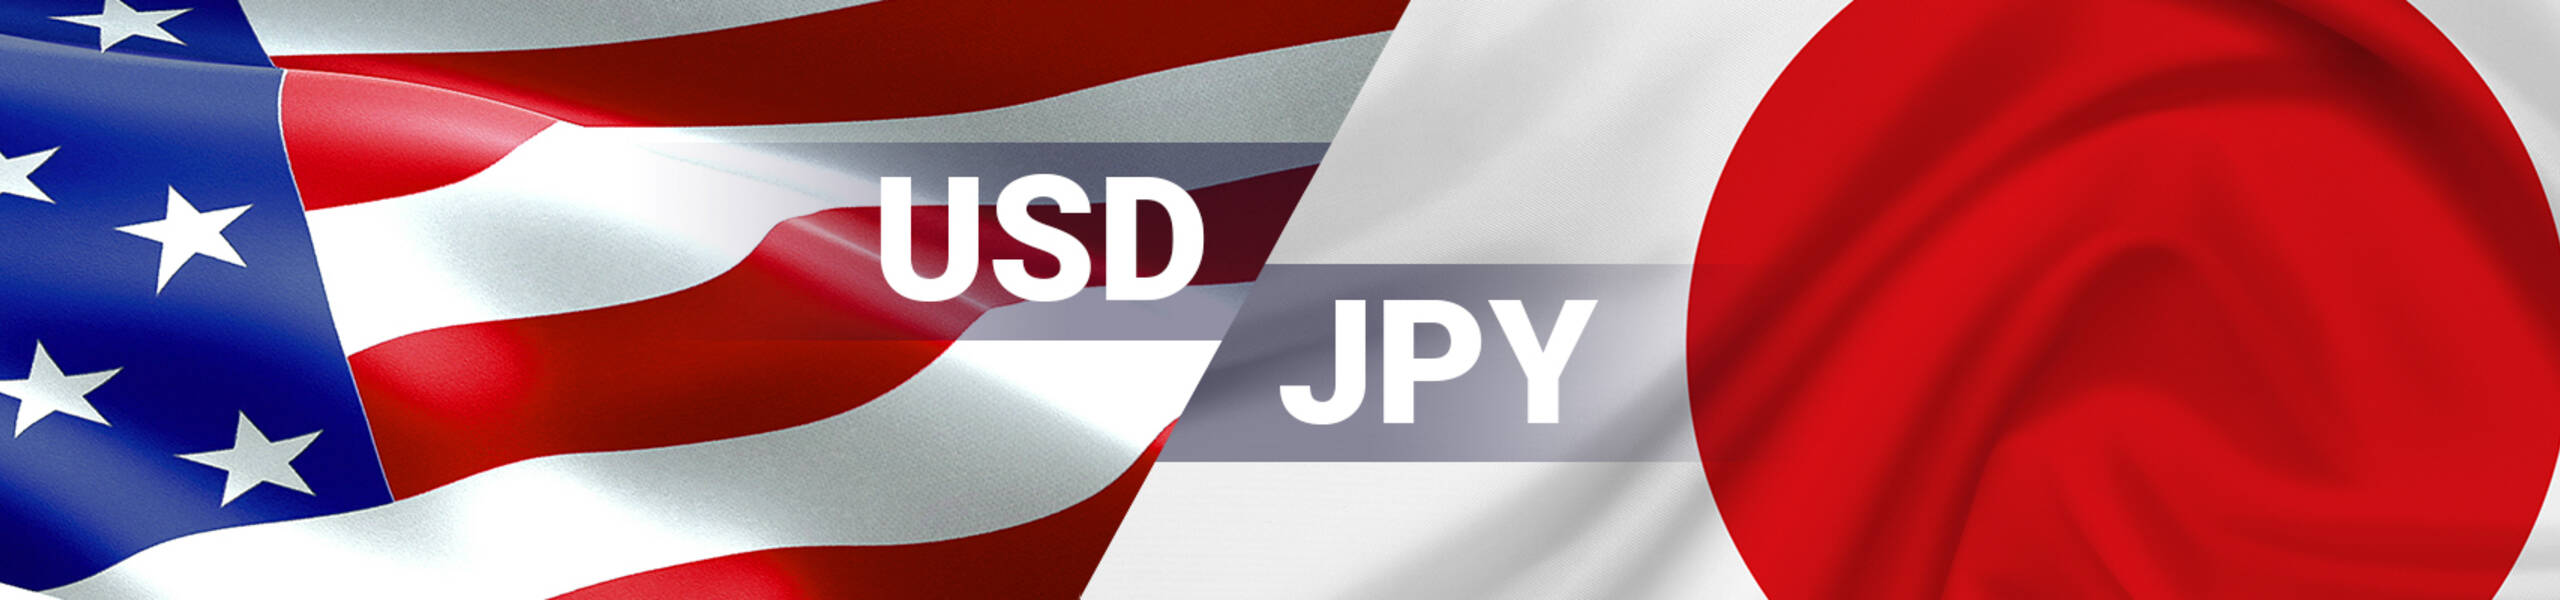 USD/JPY looking to retrace 50%